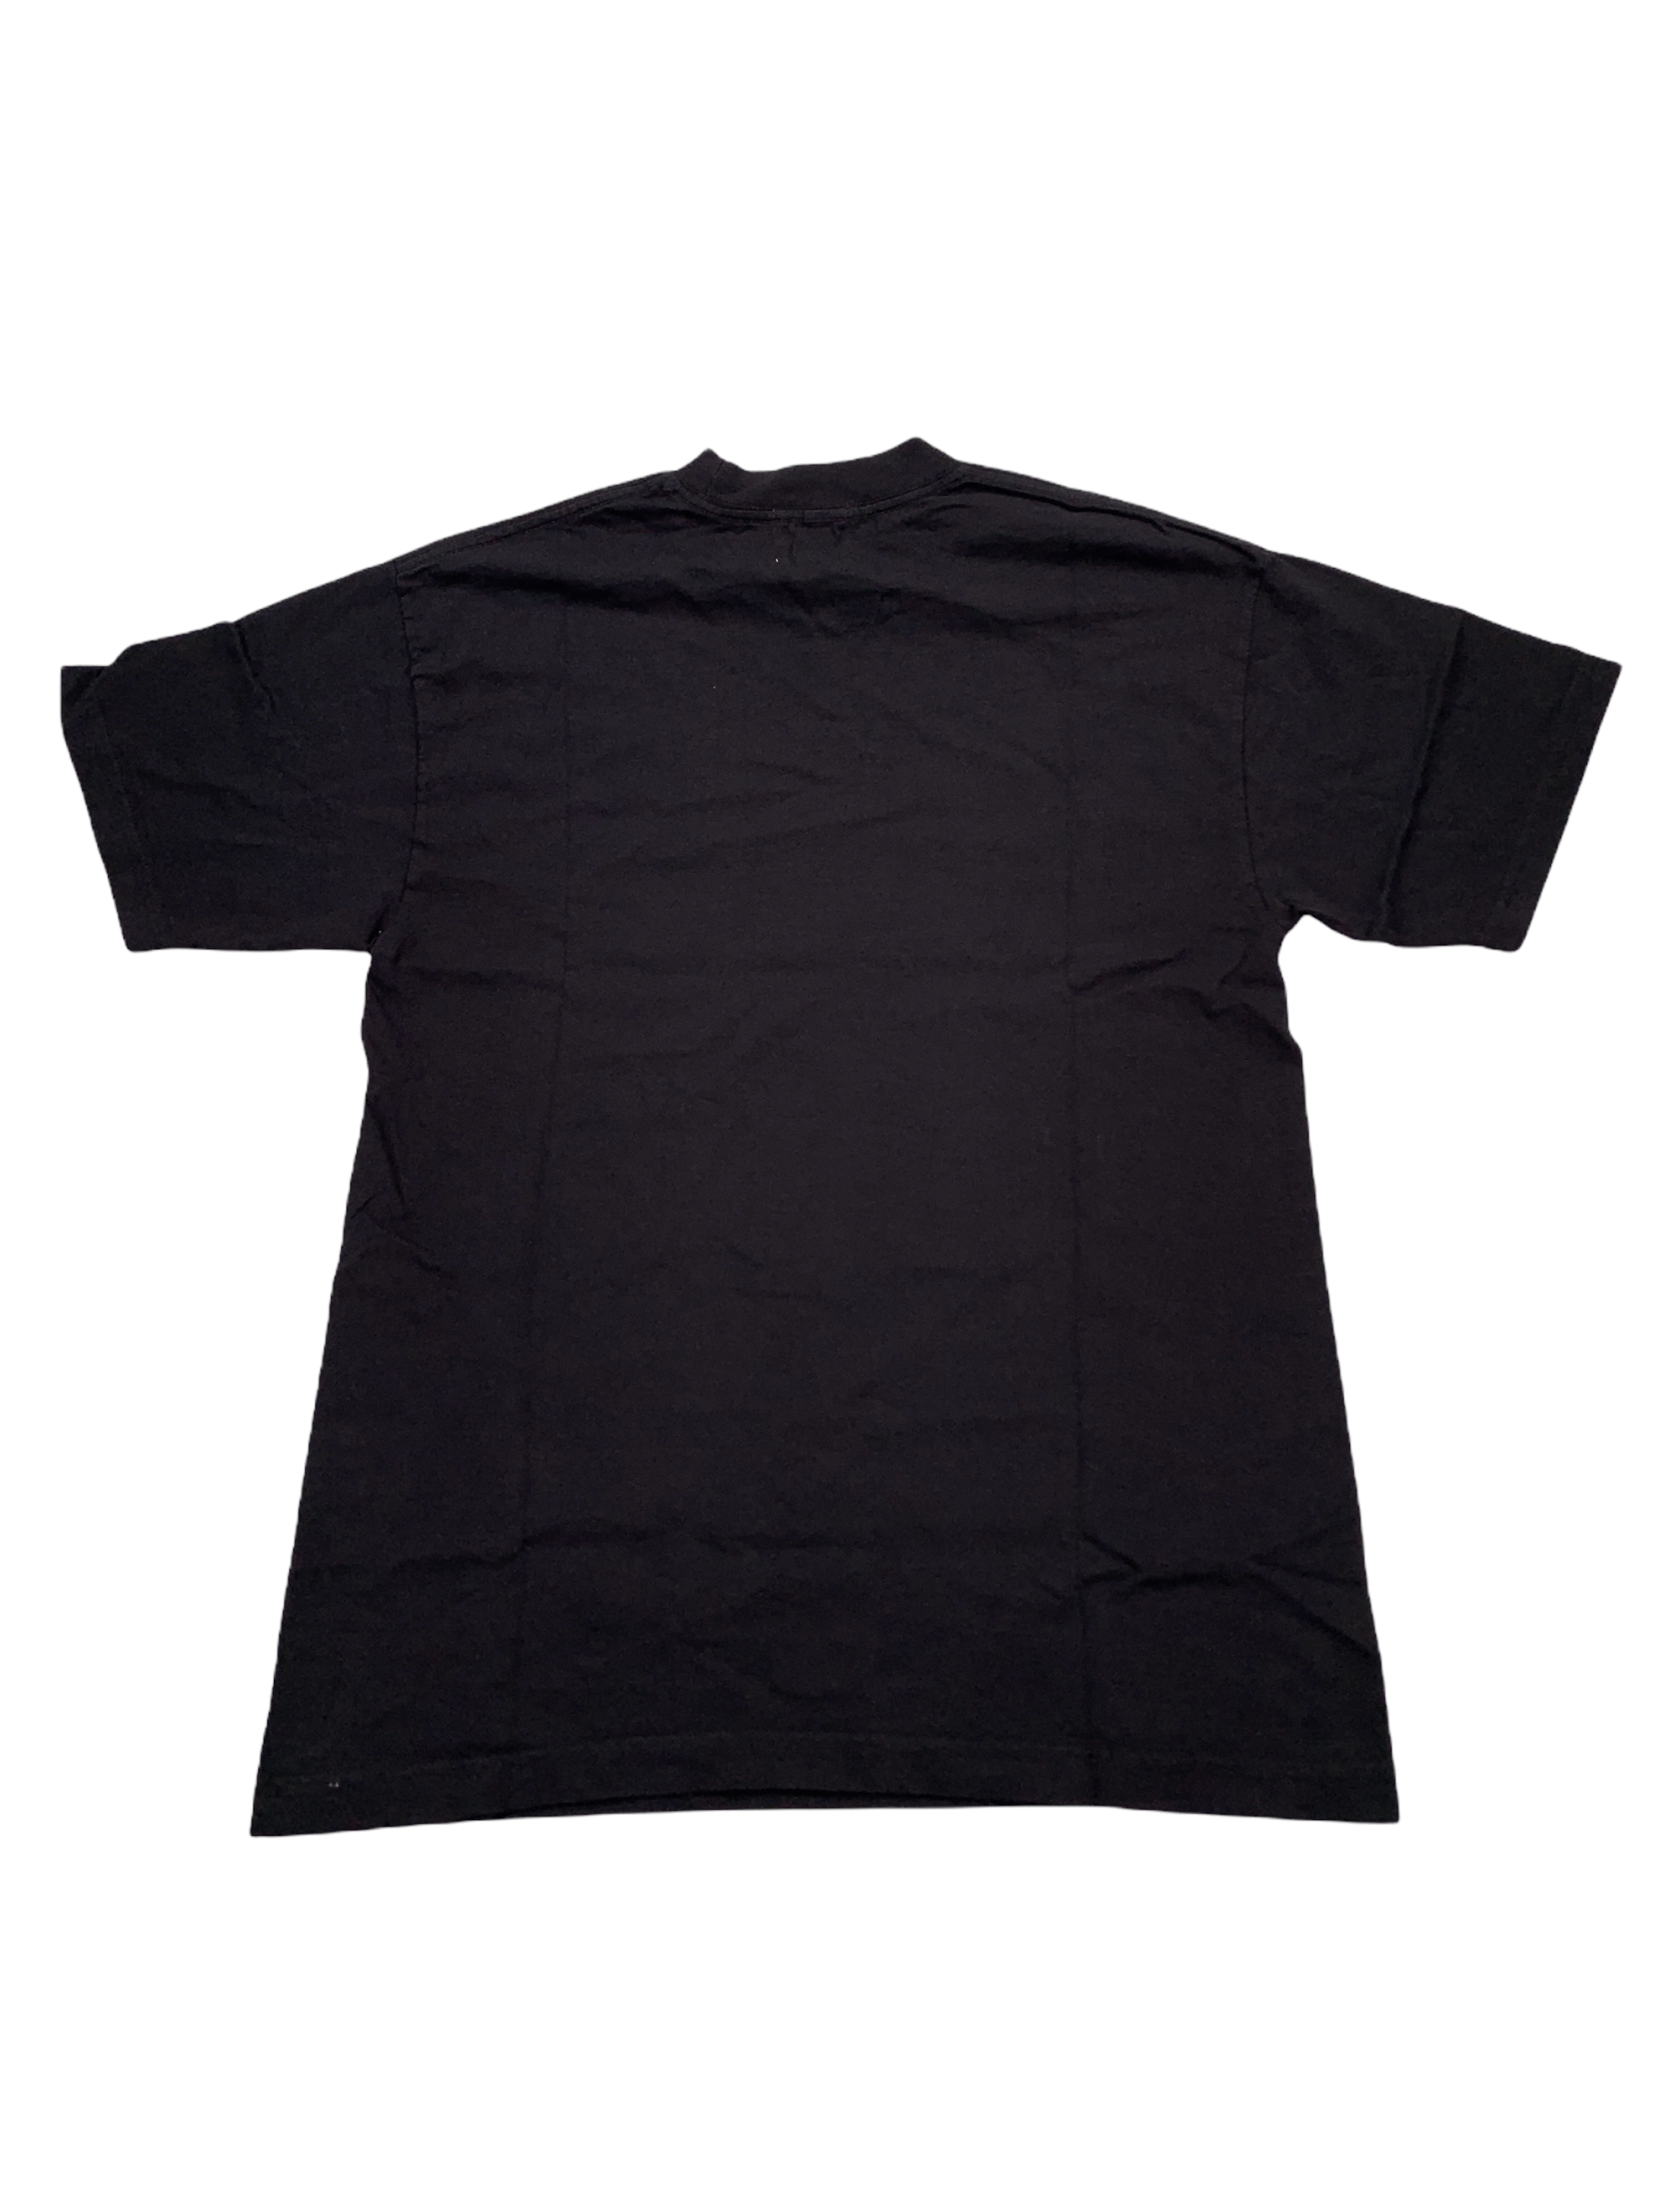 Alternate View 1 of Warren Lotas x Prince Short Sleeve Shirt Black